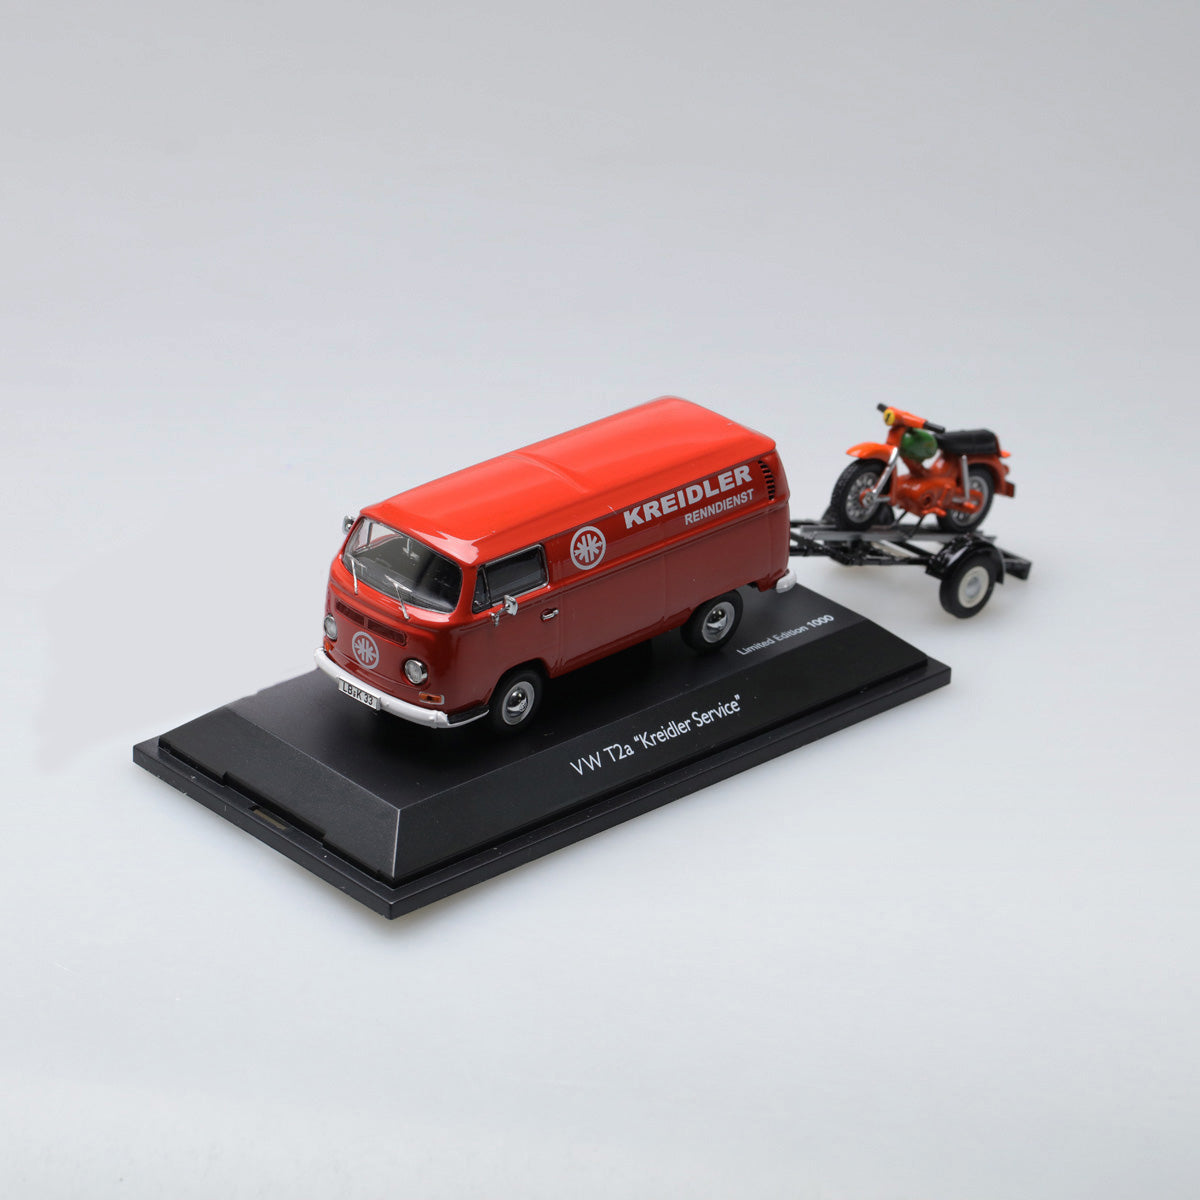 Schuco 1:43 Volkswagen T2a Kreidler-Service box van with bike trailer and Kreidler Florett 450334000